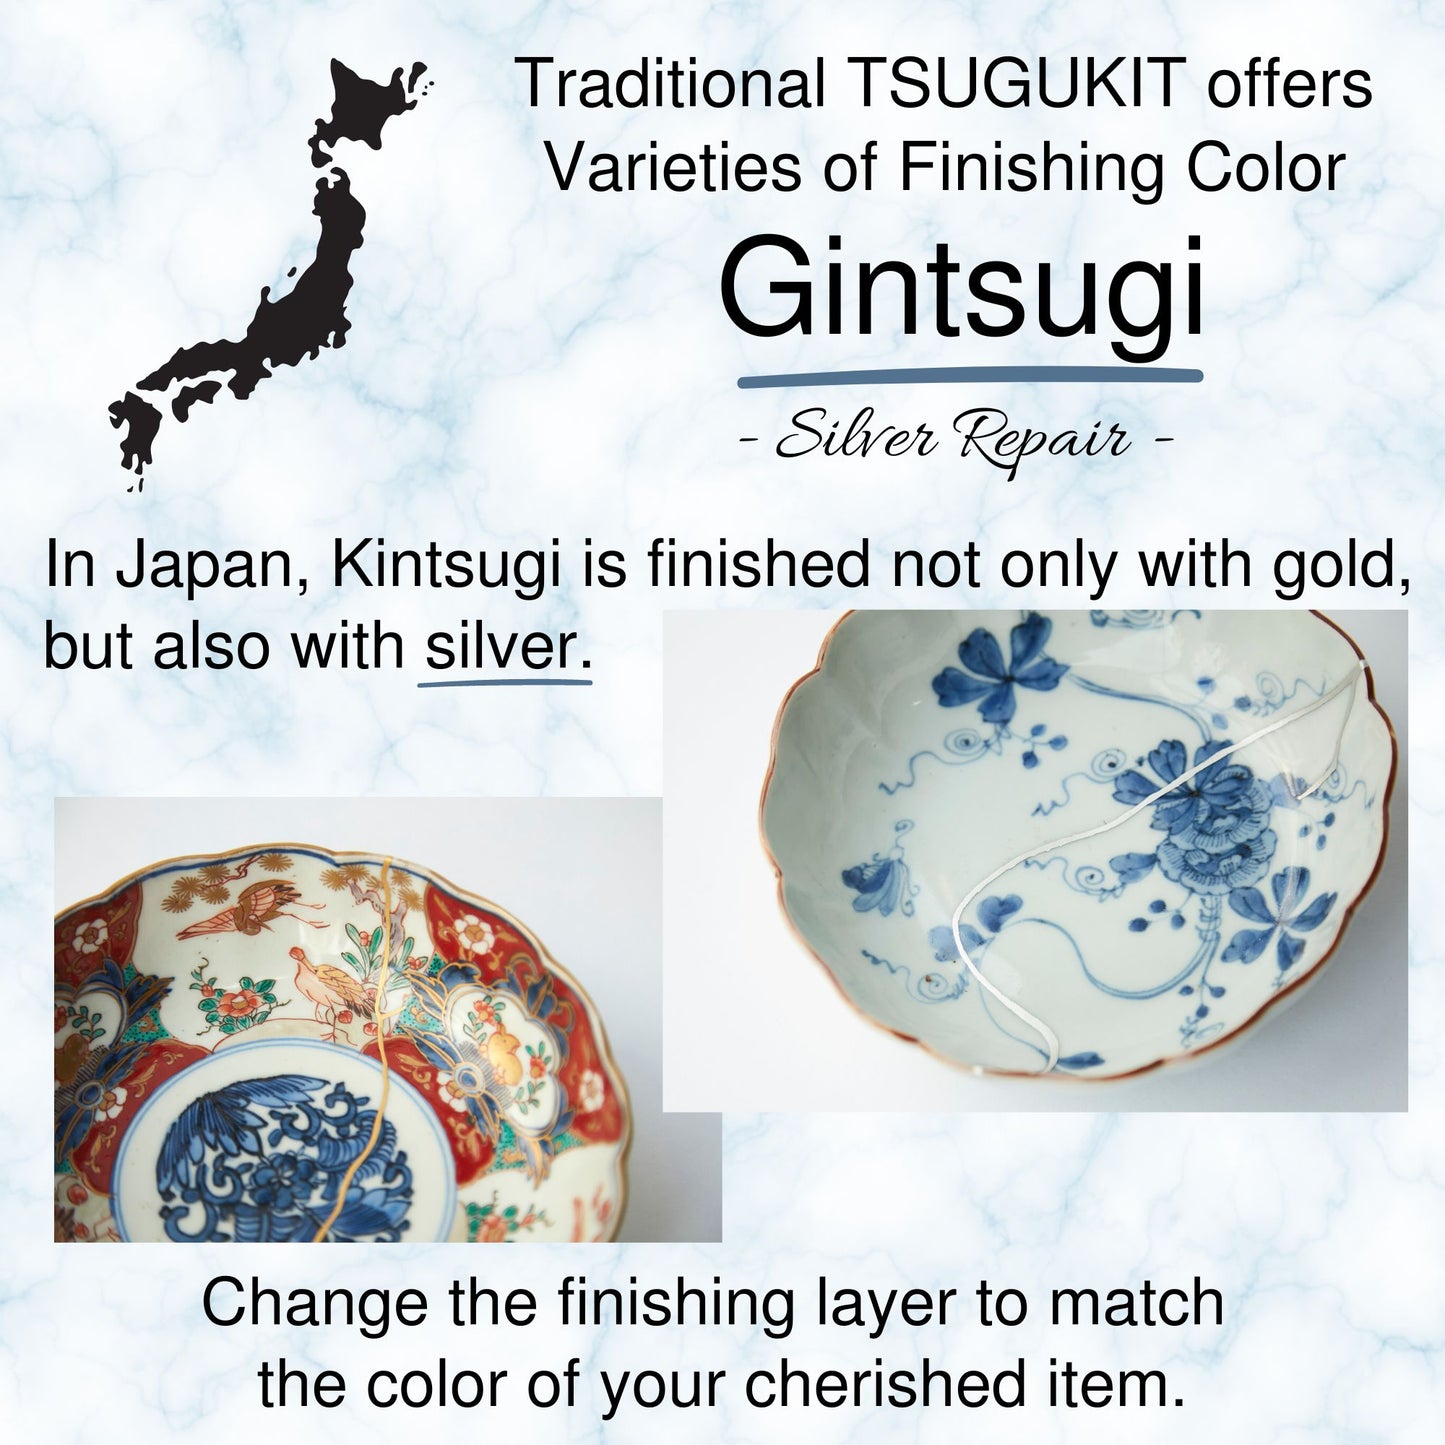 Kintsugi kit - Traditional TSUGUKIT (Gold Powder 0.3g, Silver Powder 0.5g)